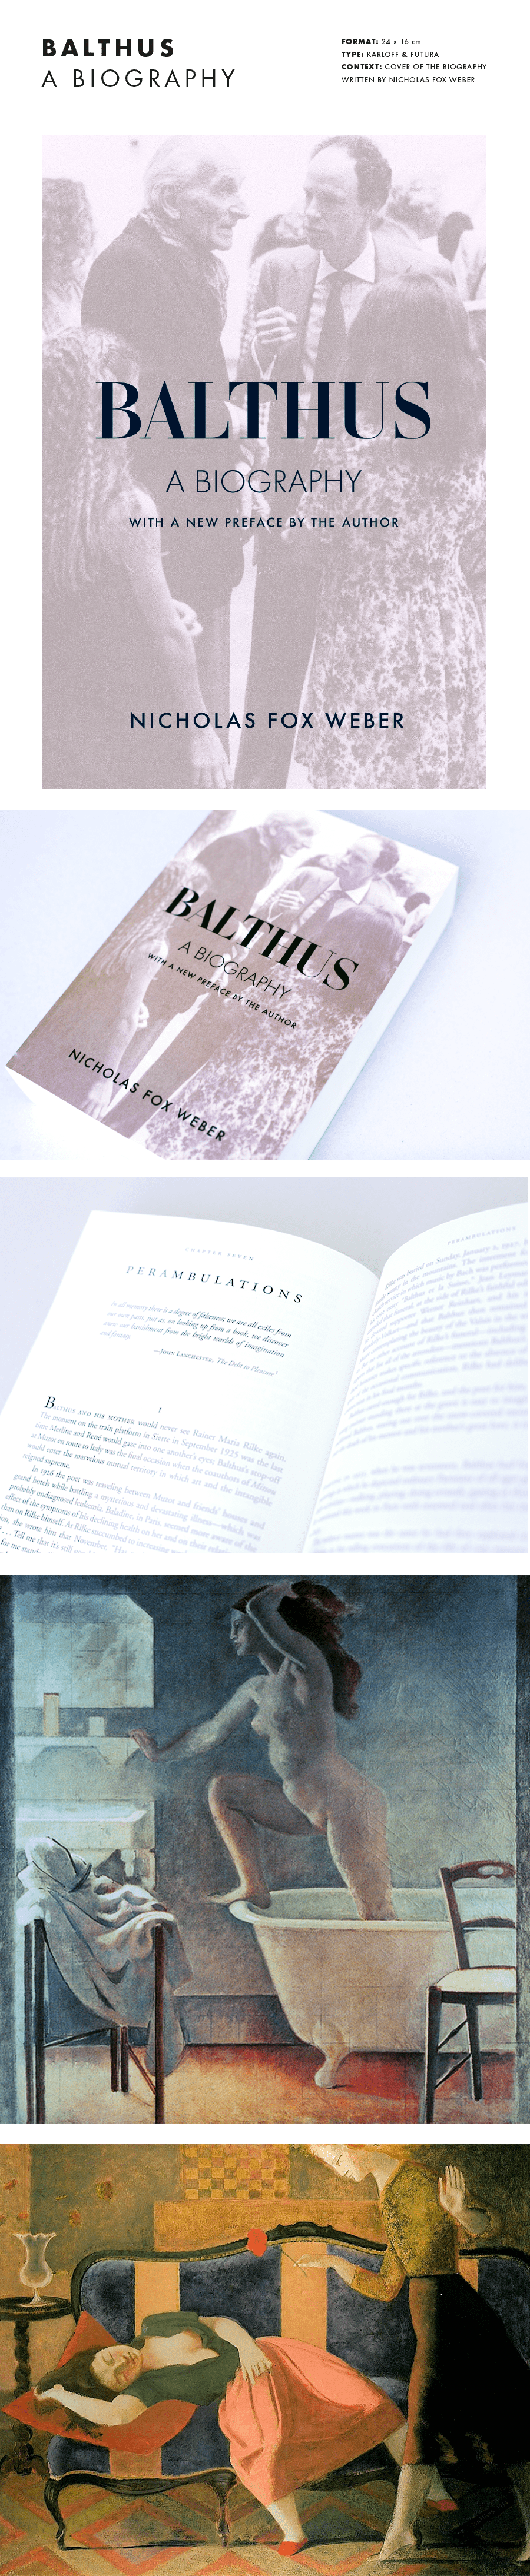 Balthus biography karloff typo Nicholas FOX Weber cover book design composition culture